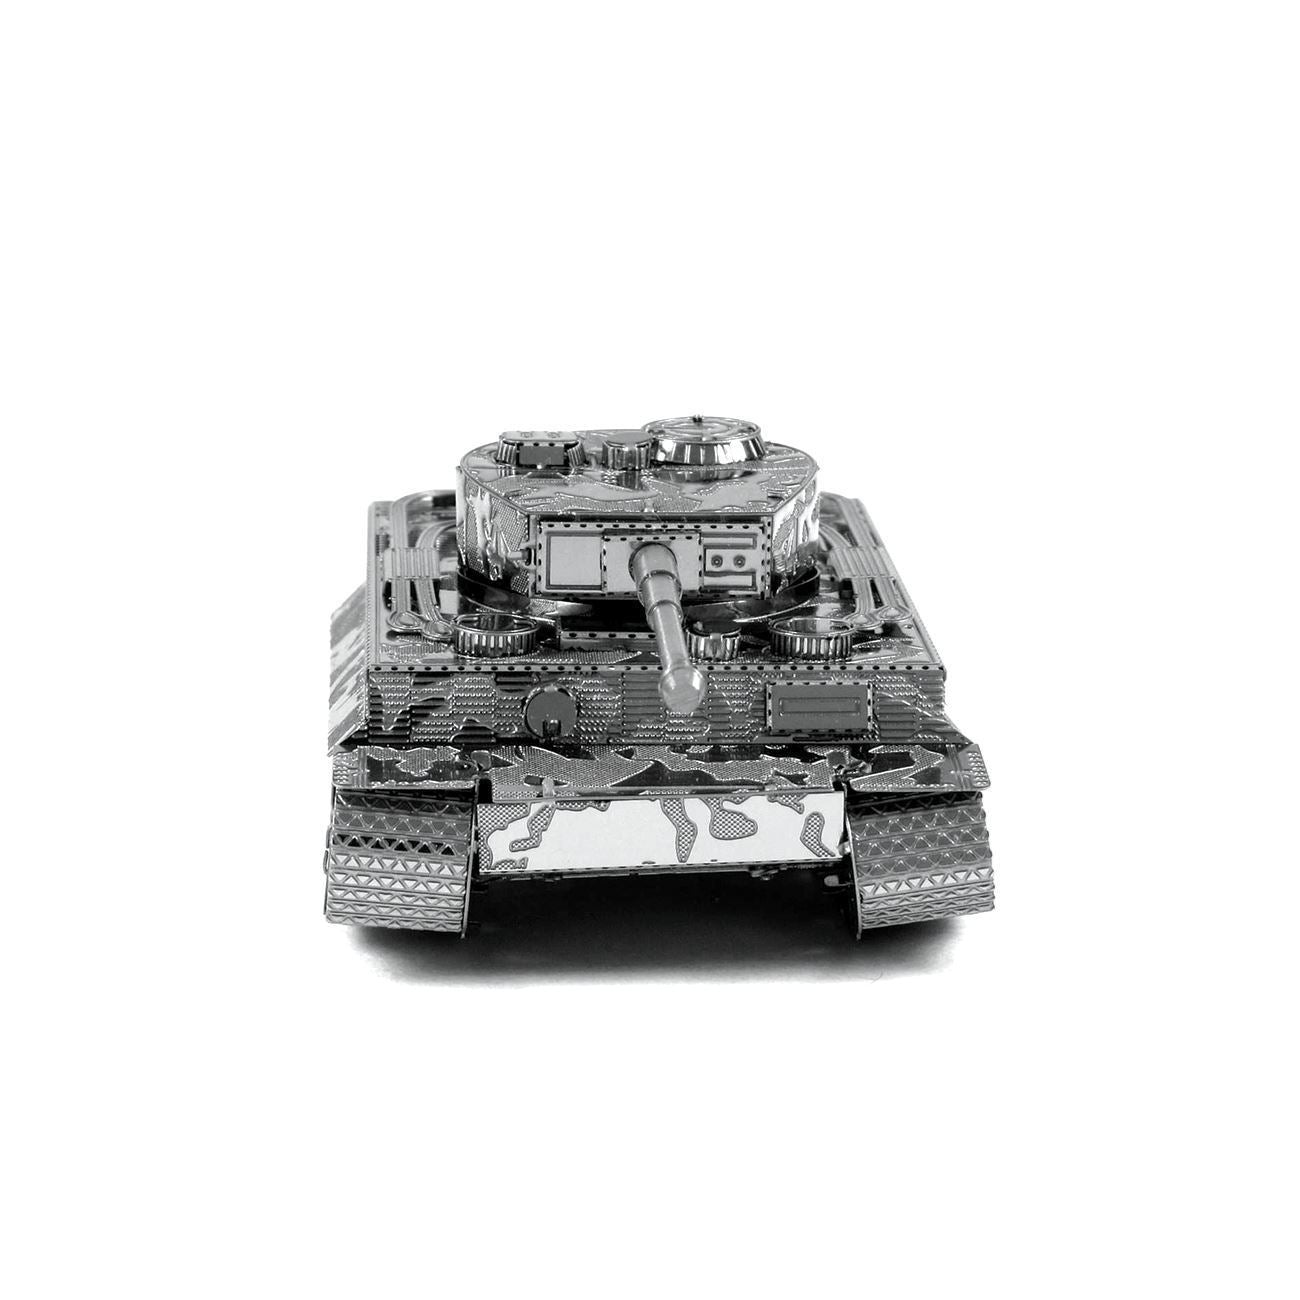 Metal Earth Tiger I Tank